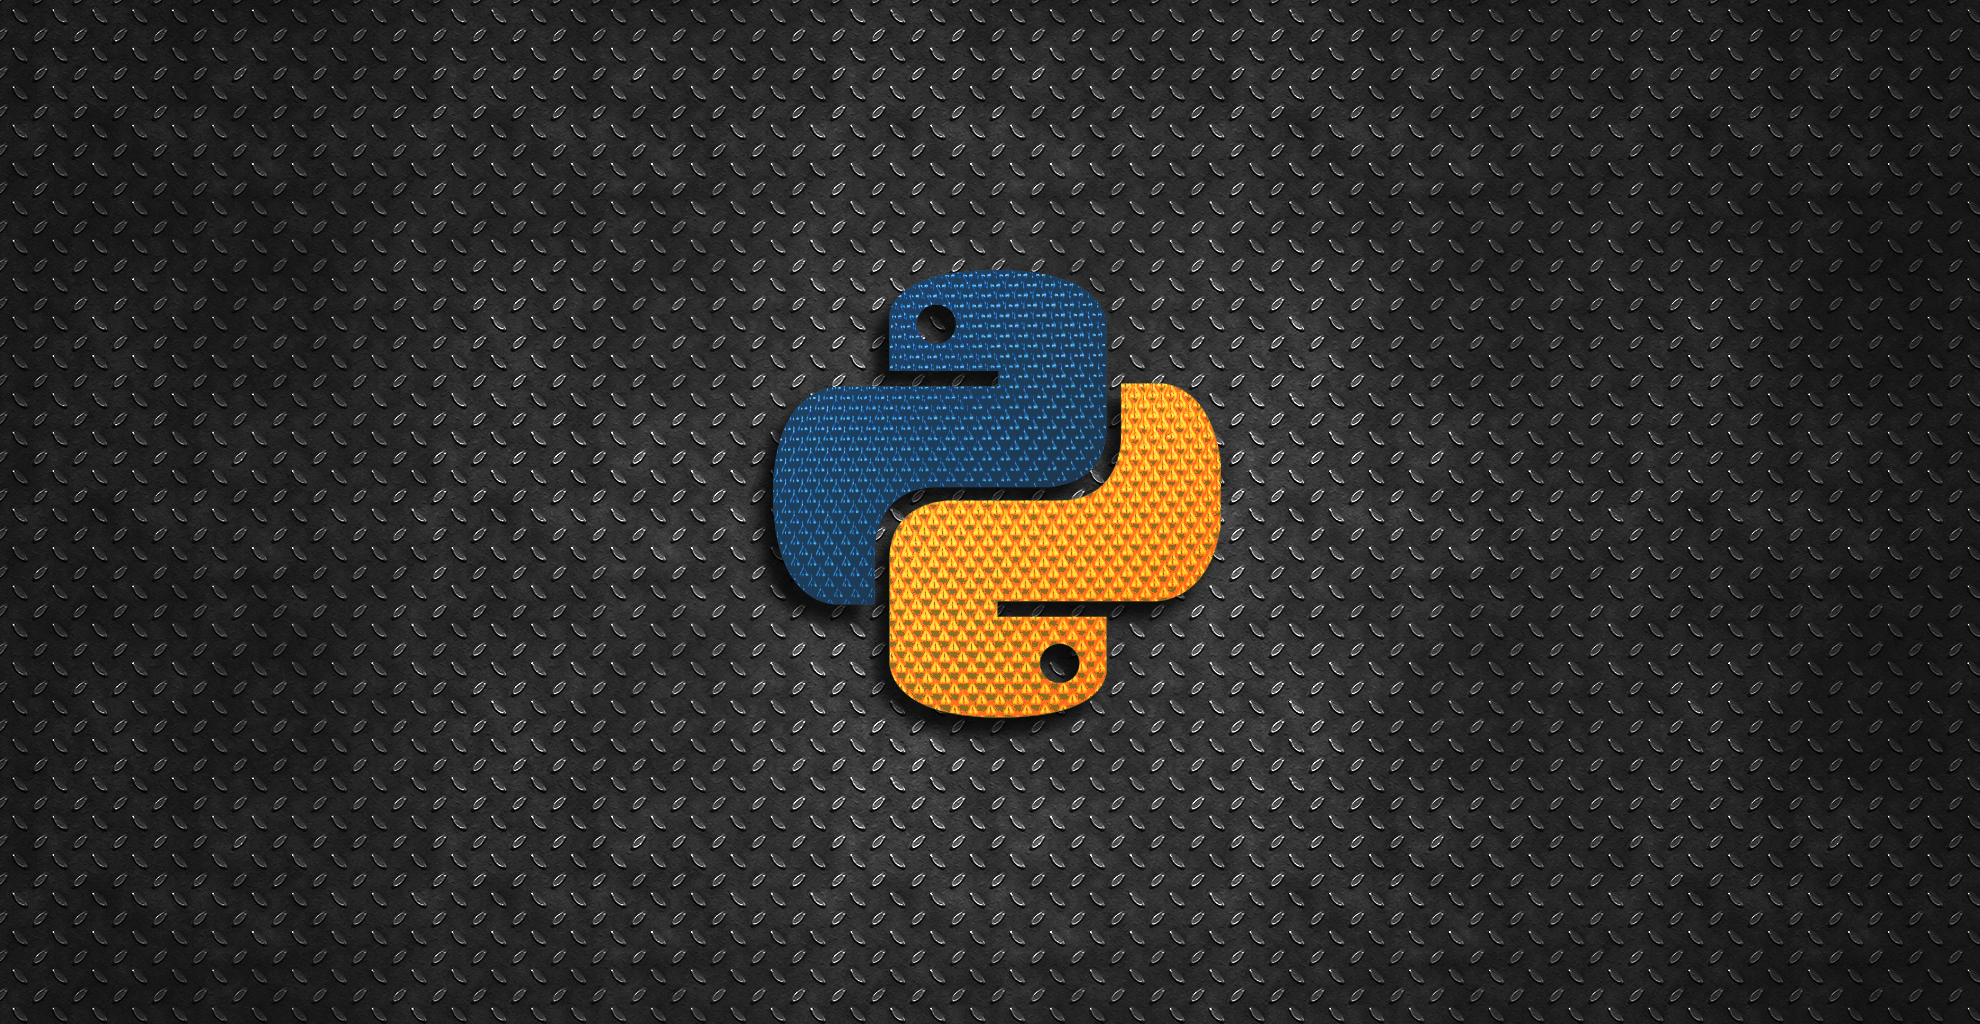  Python   Losst Python programming